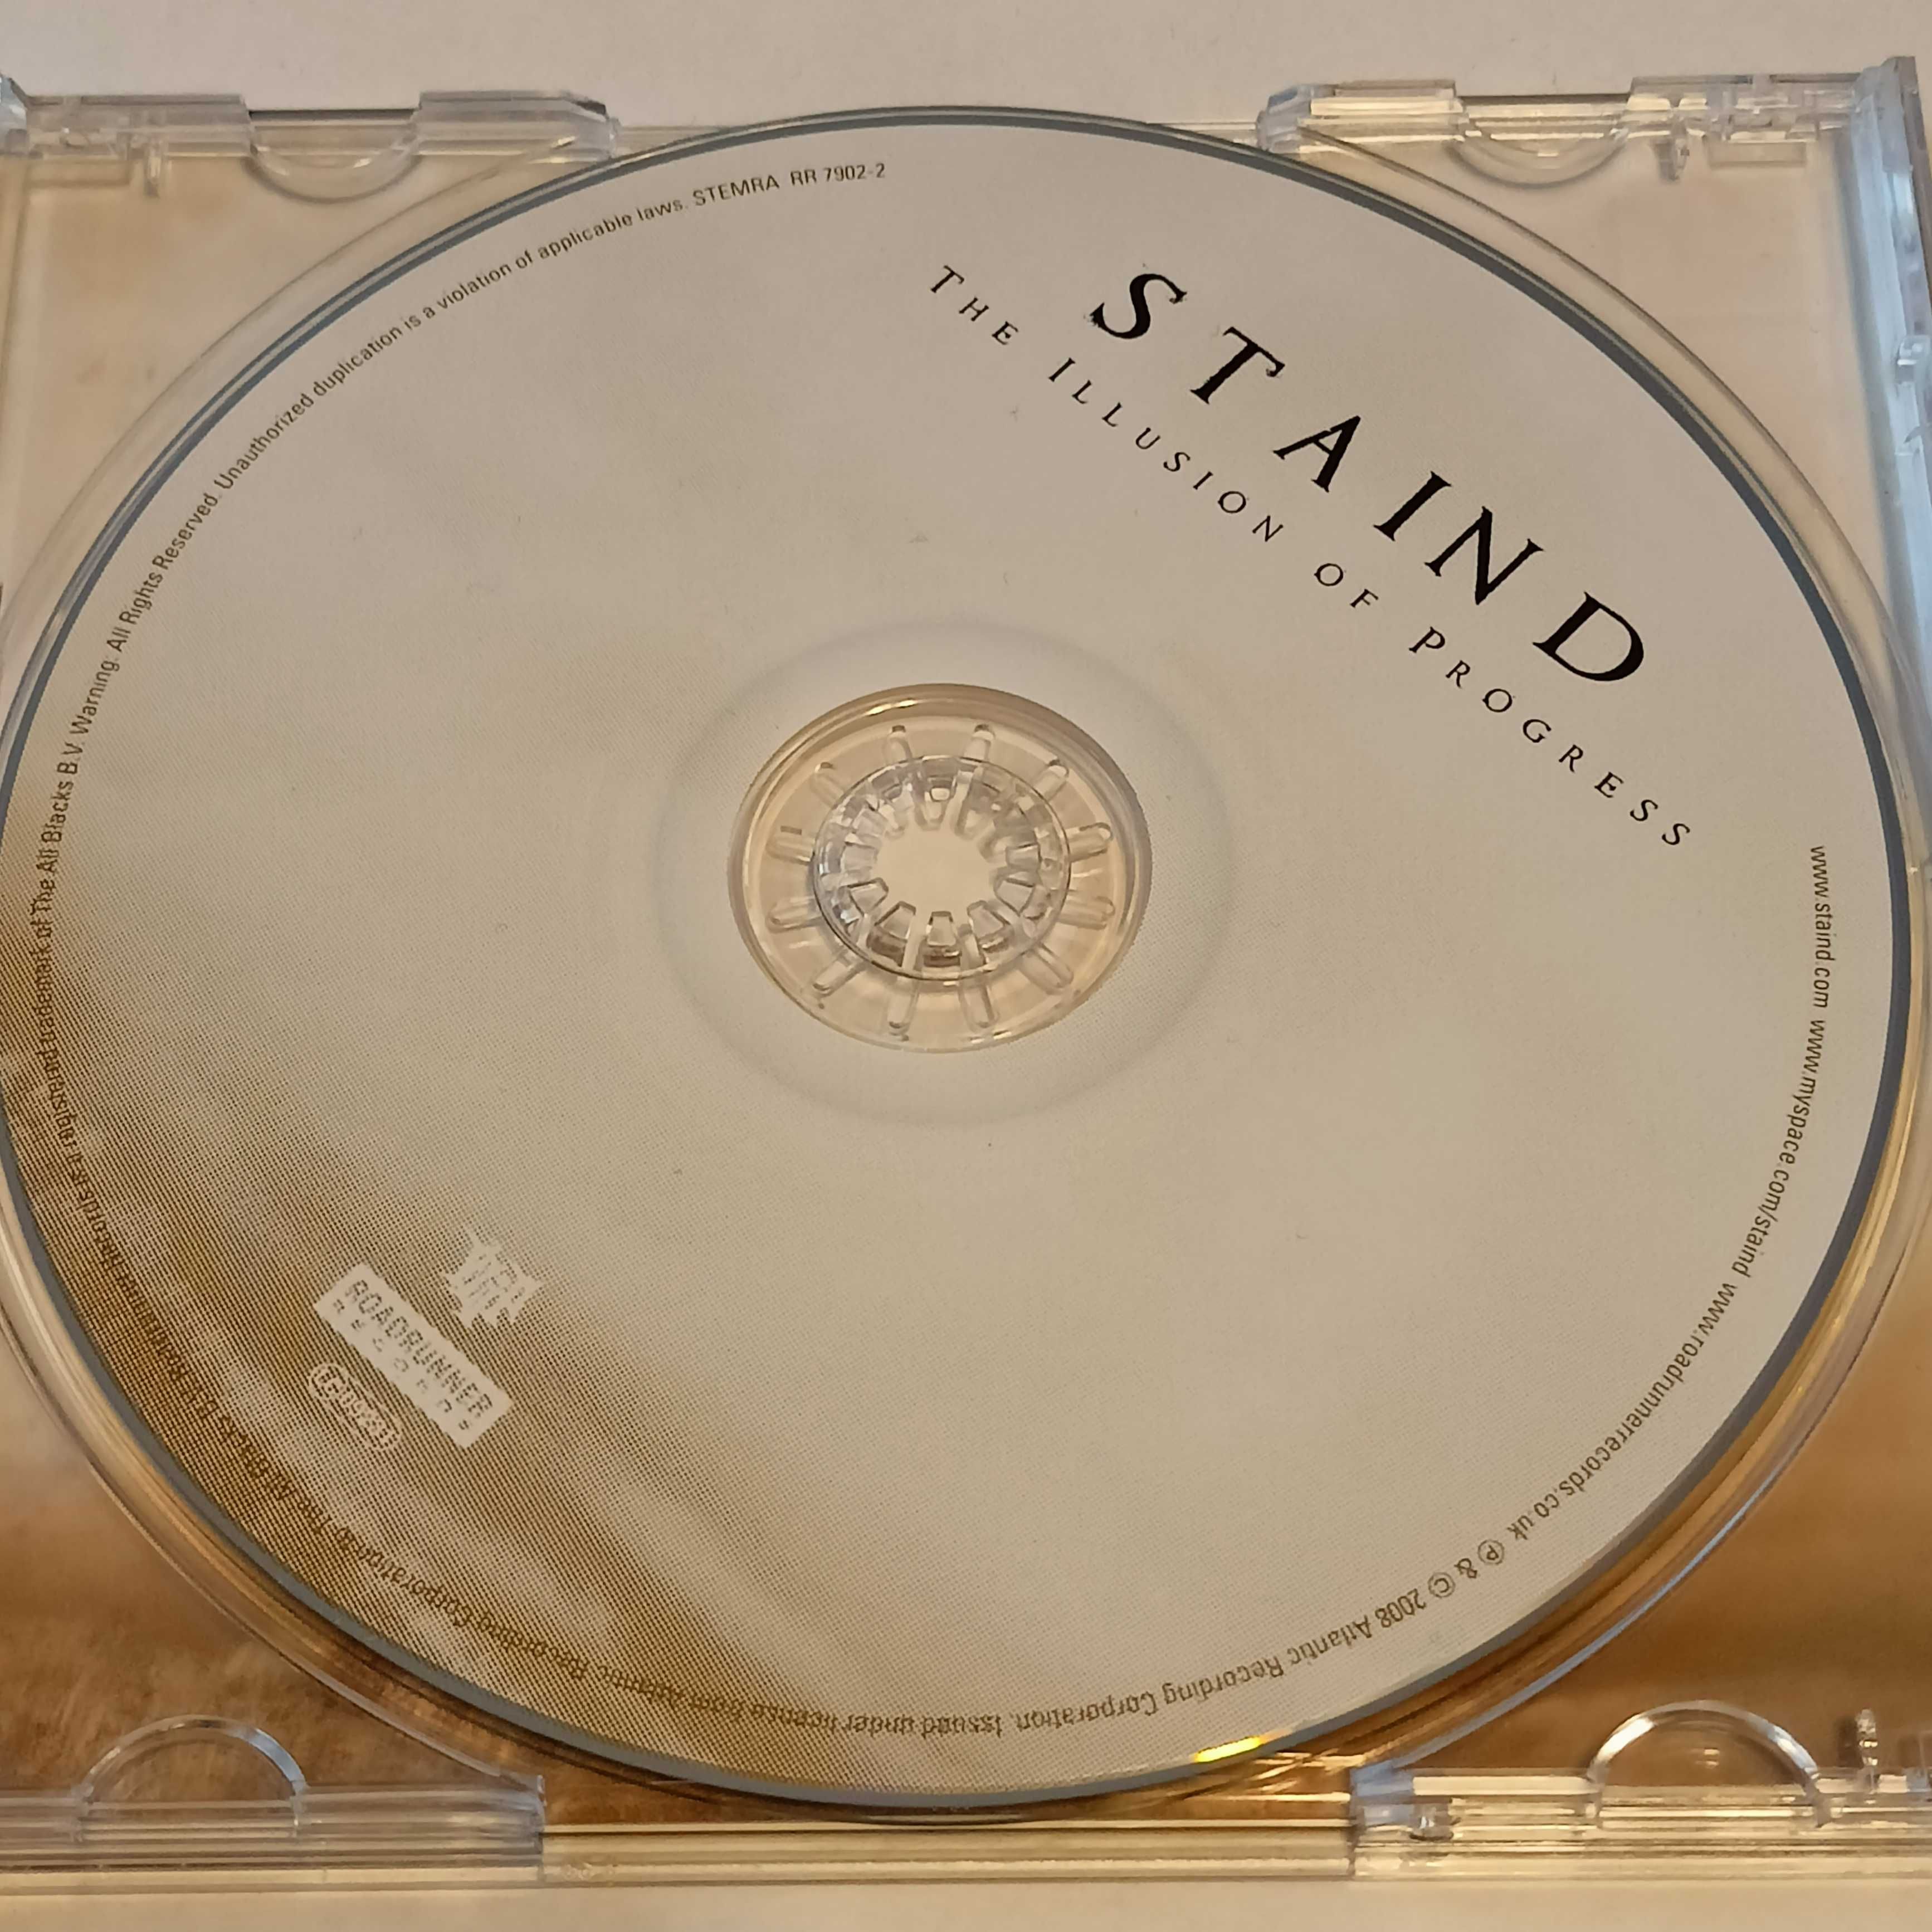 Staind | The Illusion of Progress | CD